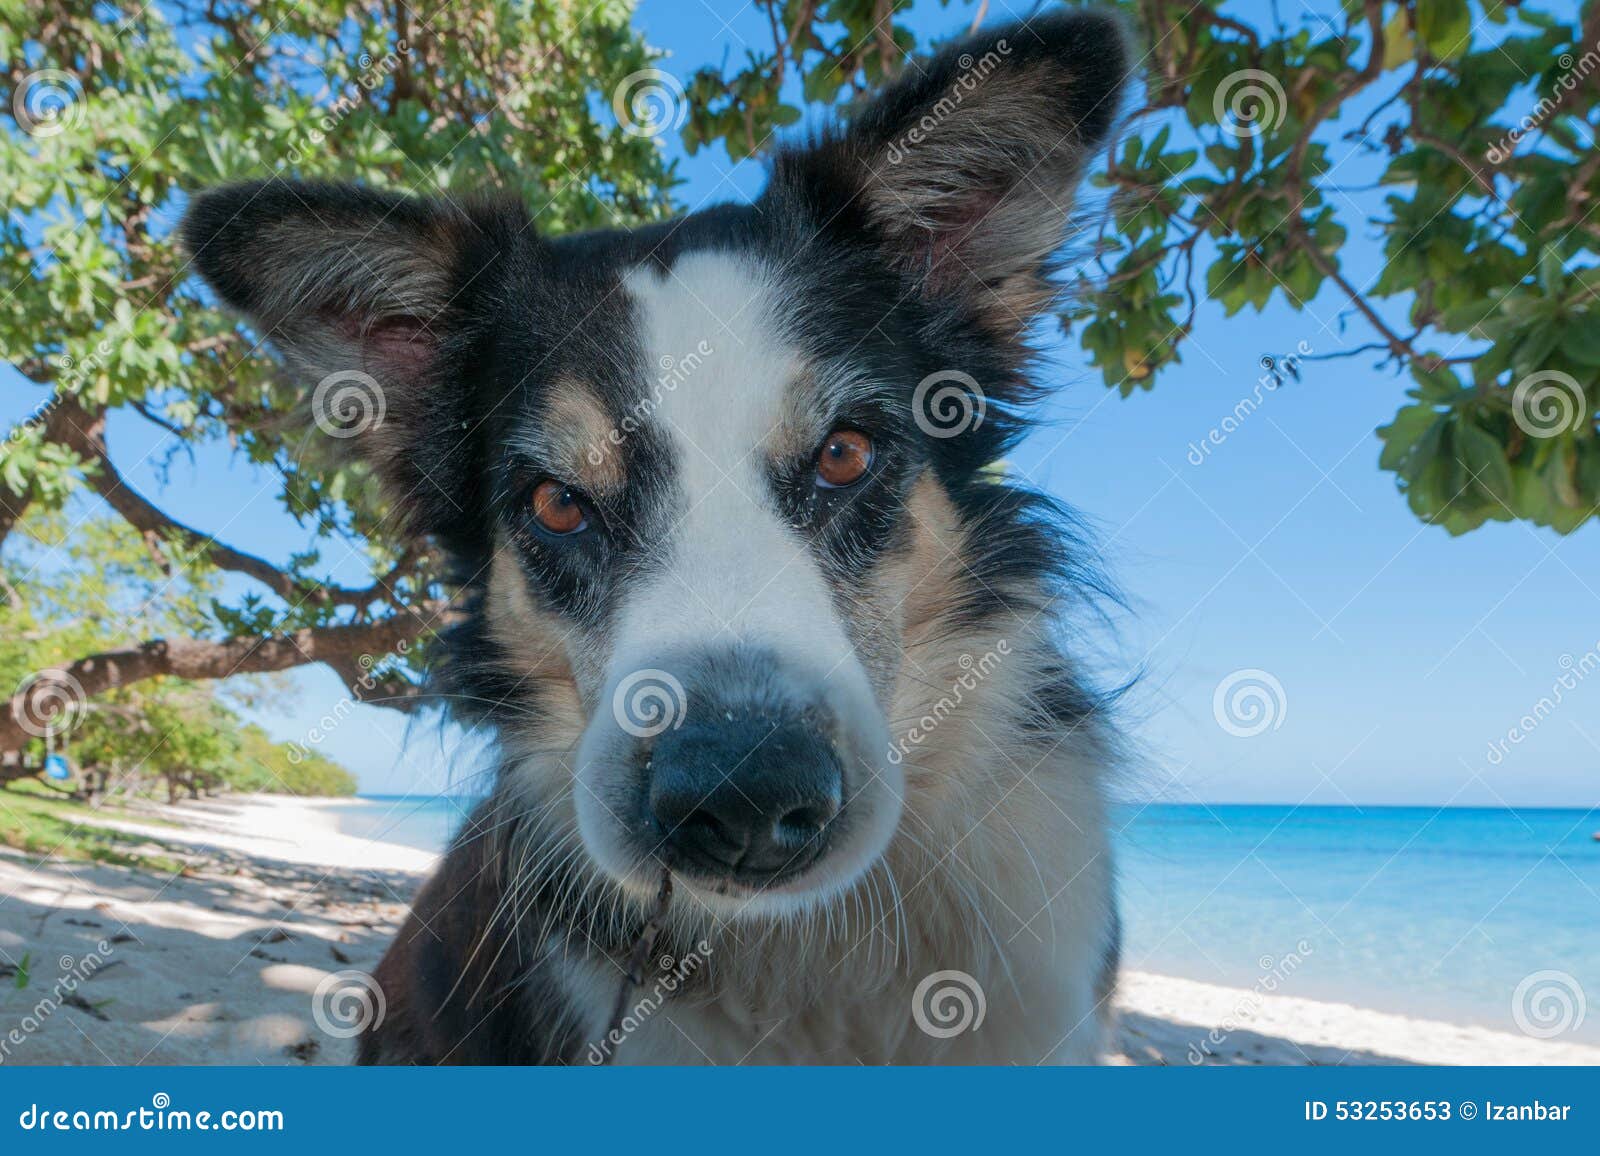 32 Dog Polynesian Photos Free Royalty Free Stock Photos From Dreamstime